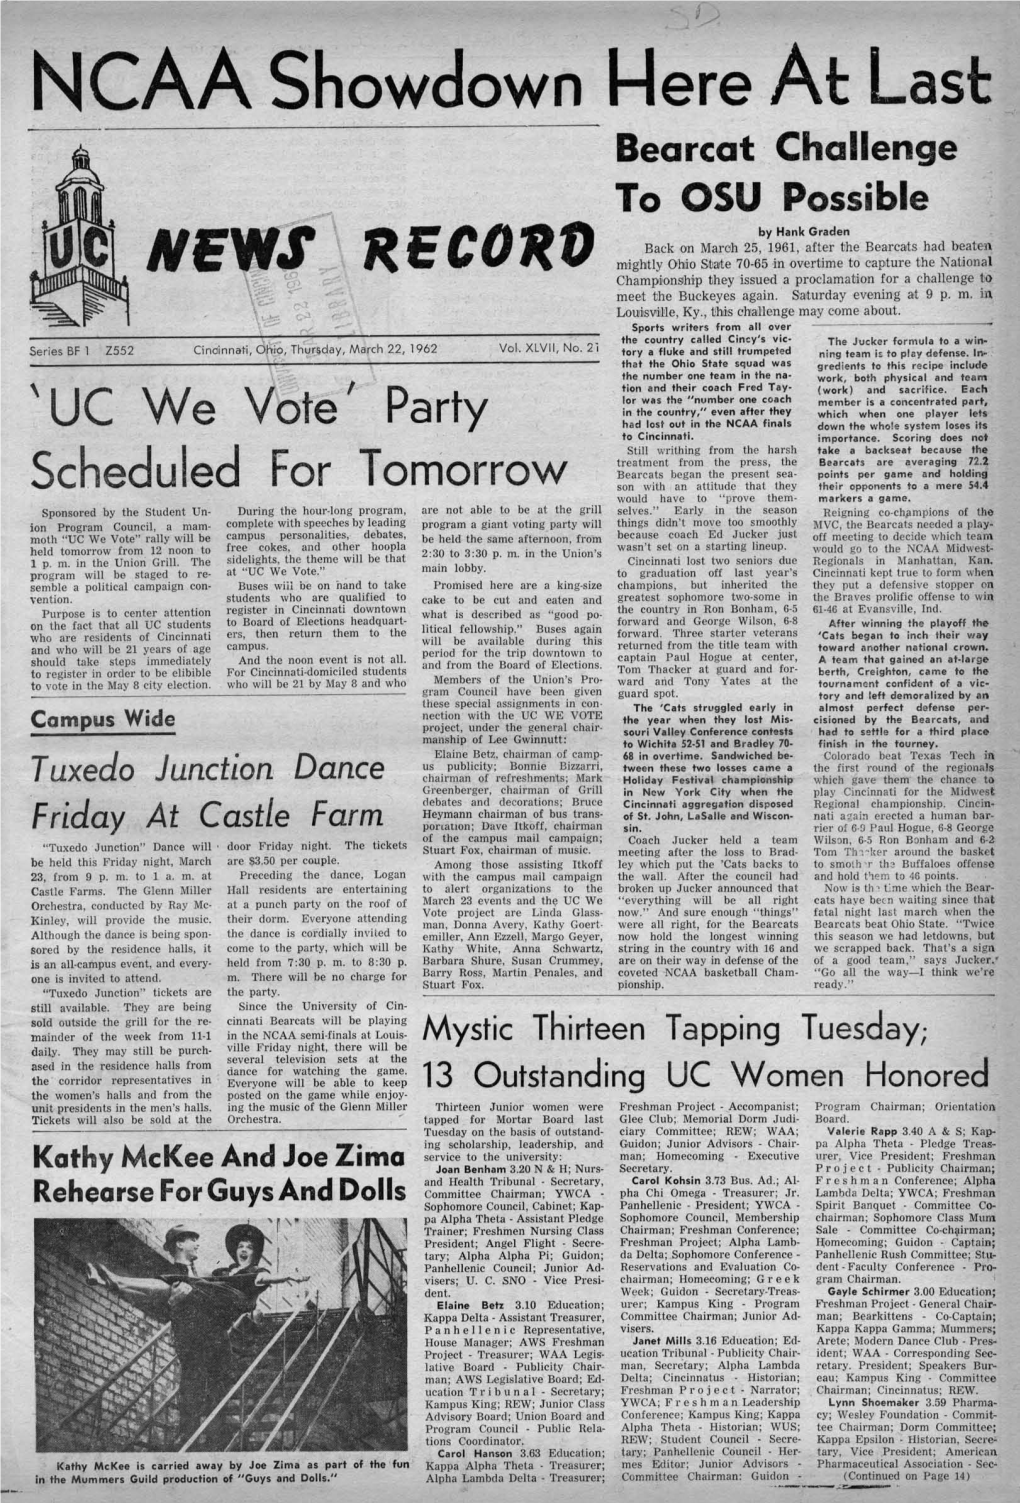 University of Cincinnati News Record. Thursday, March 22, 1962. Vol. XLVII, No